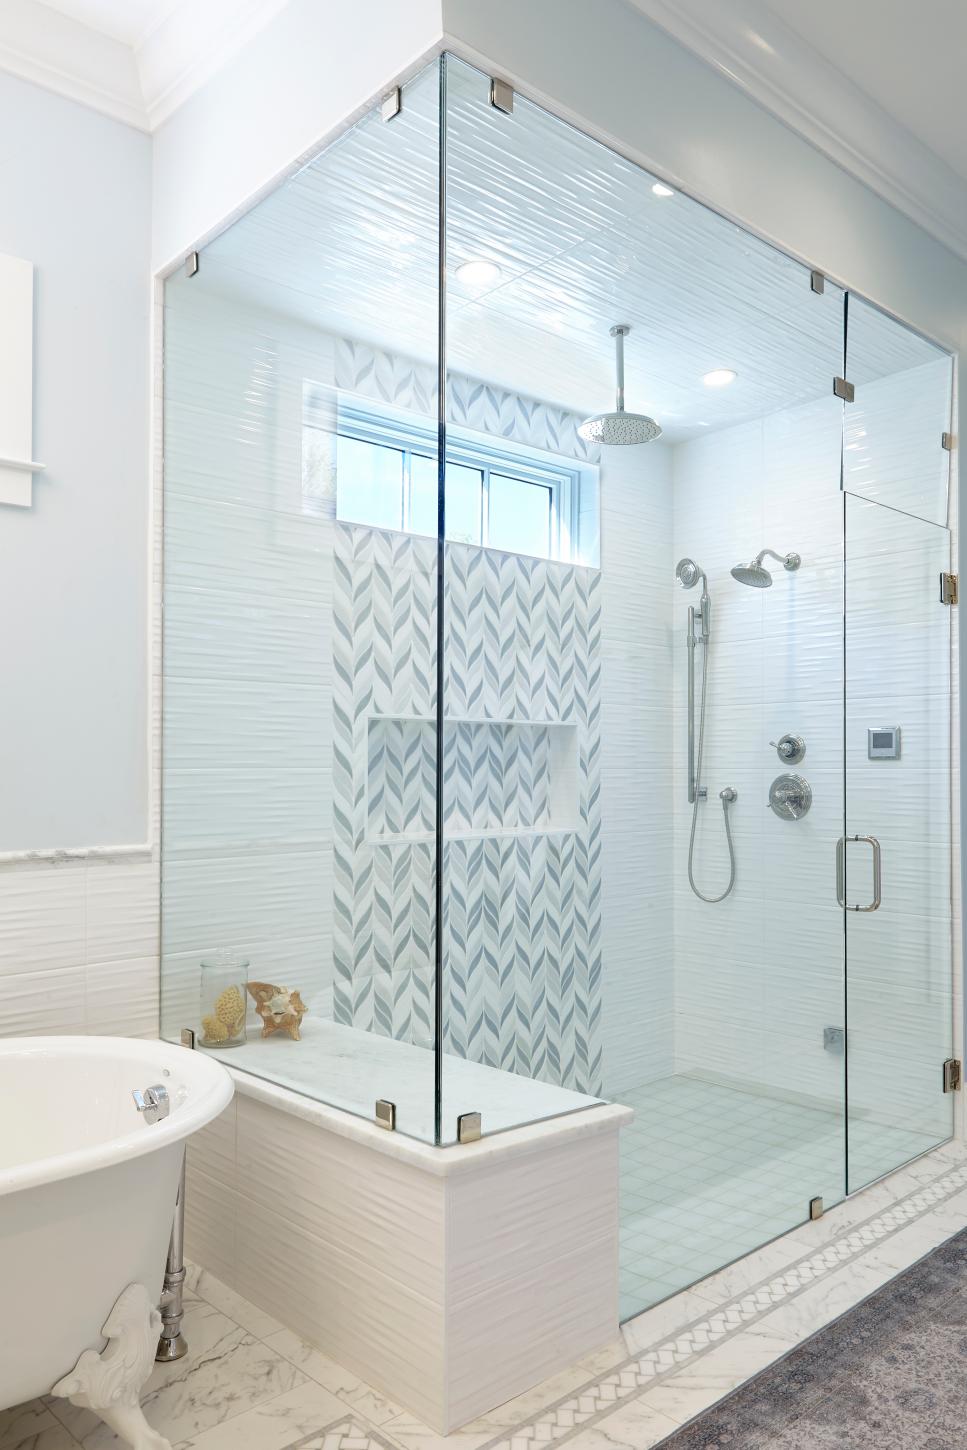 Bath And Shower Design Ideas - BEST HOME DESIGN IDEAS